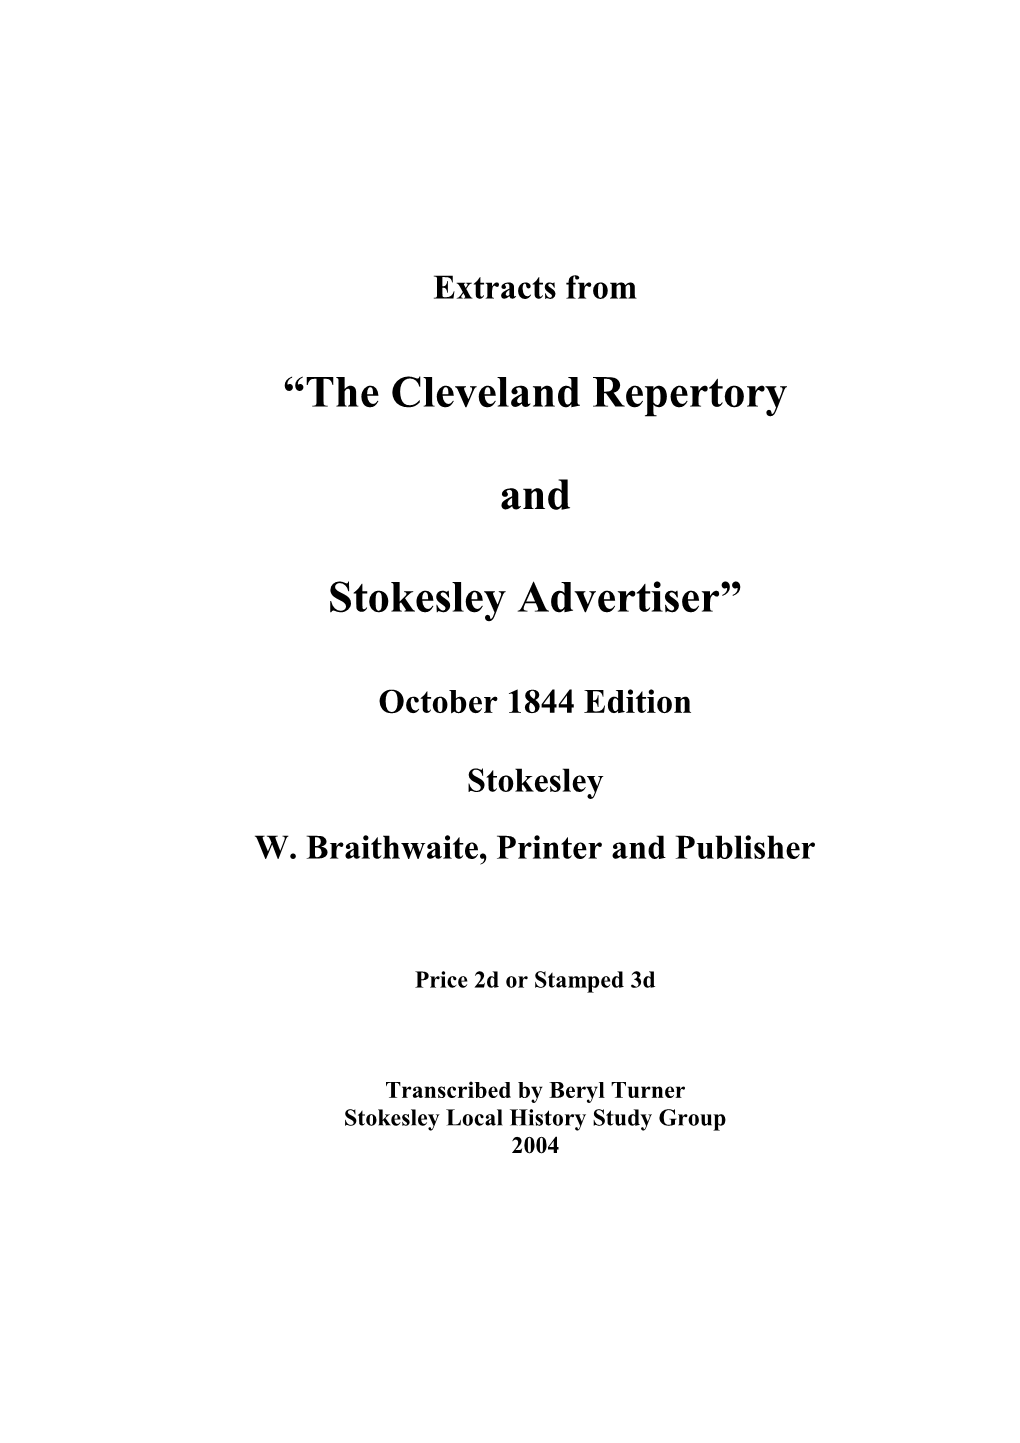 Cleveland Repertory & Stokesley Advertiser Oct 1844